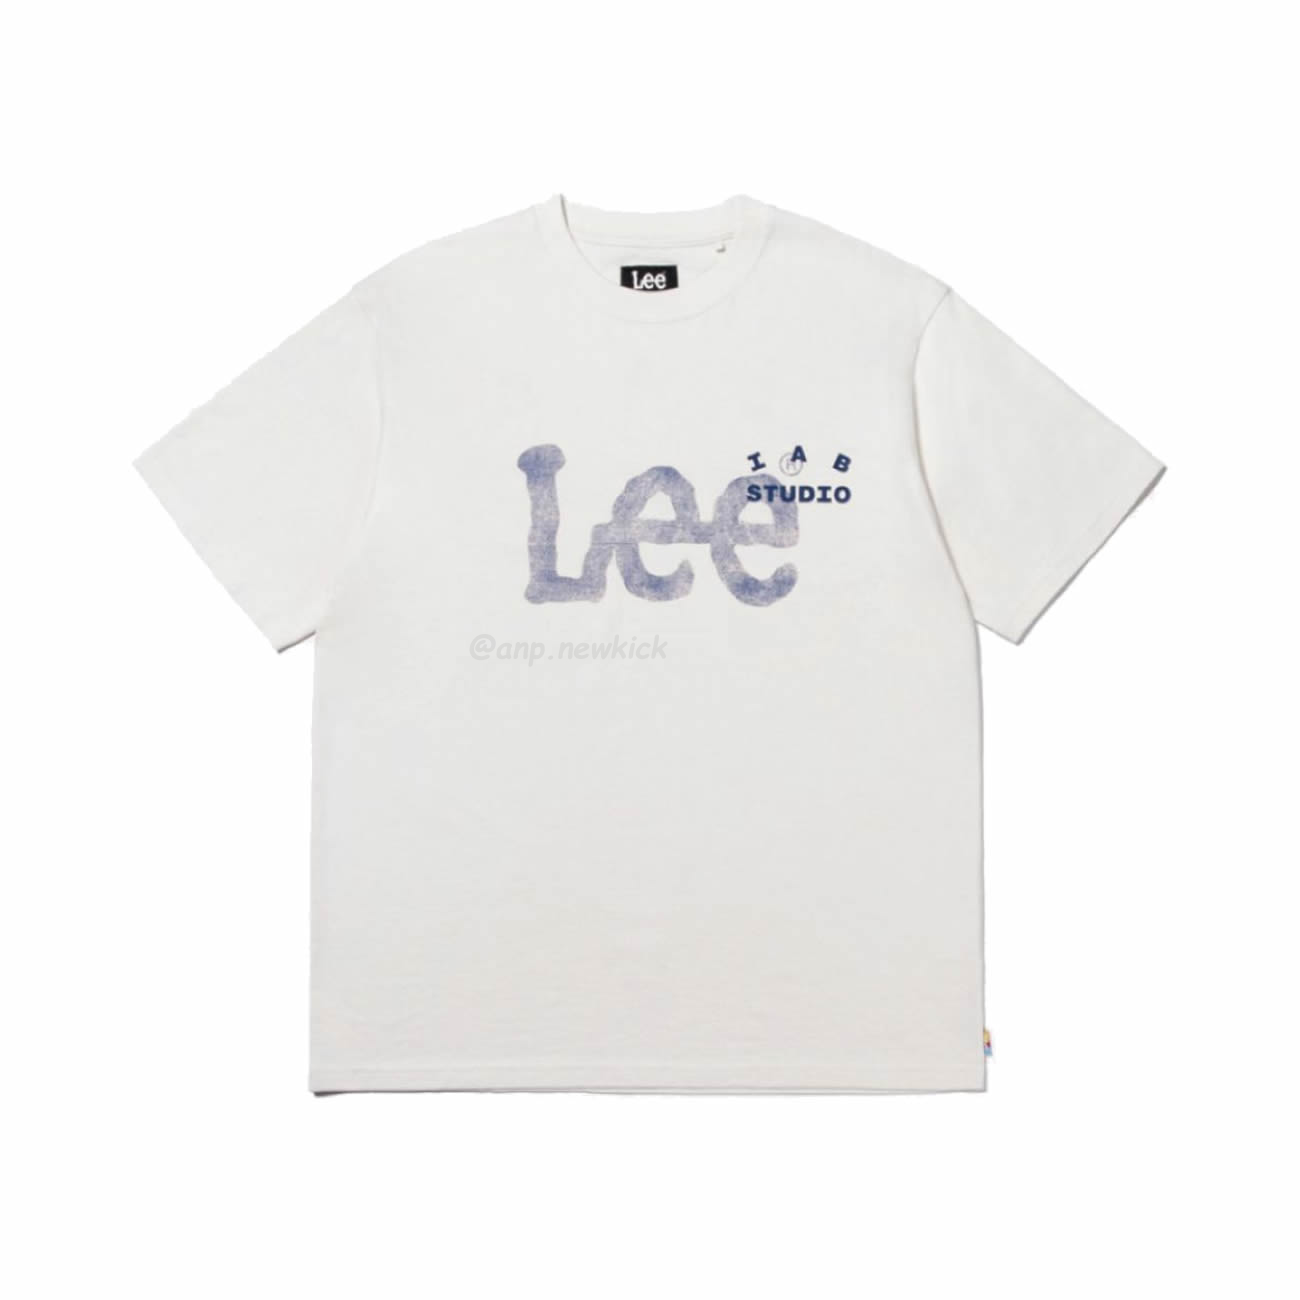 Lee X Iab Big Twitch Logo T Shirt White (1) - newkick.org